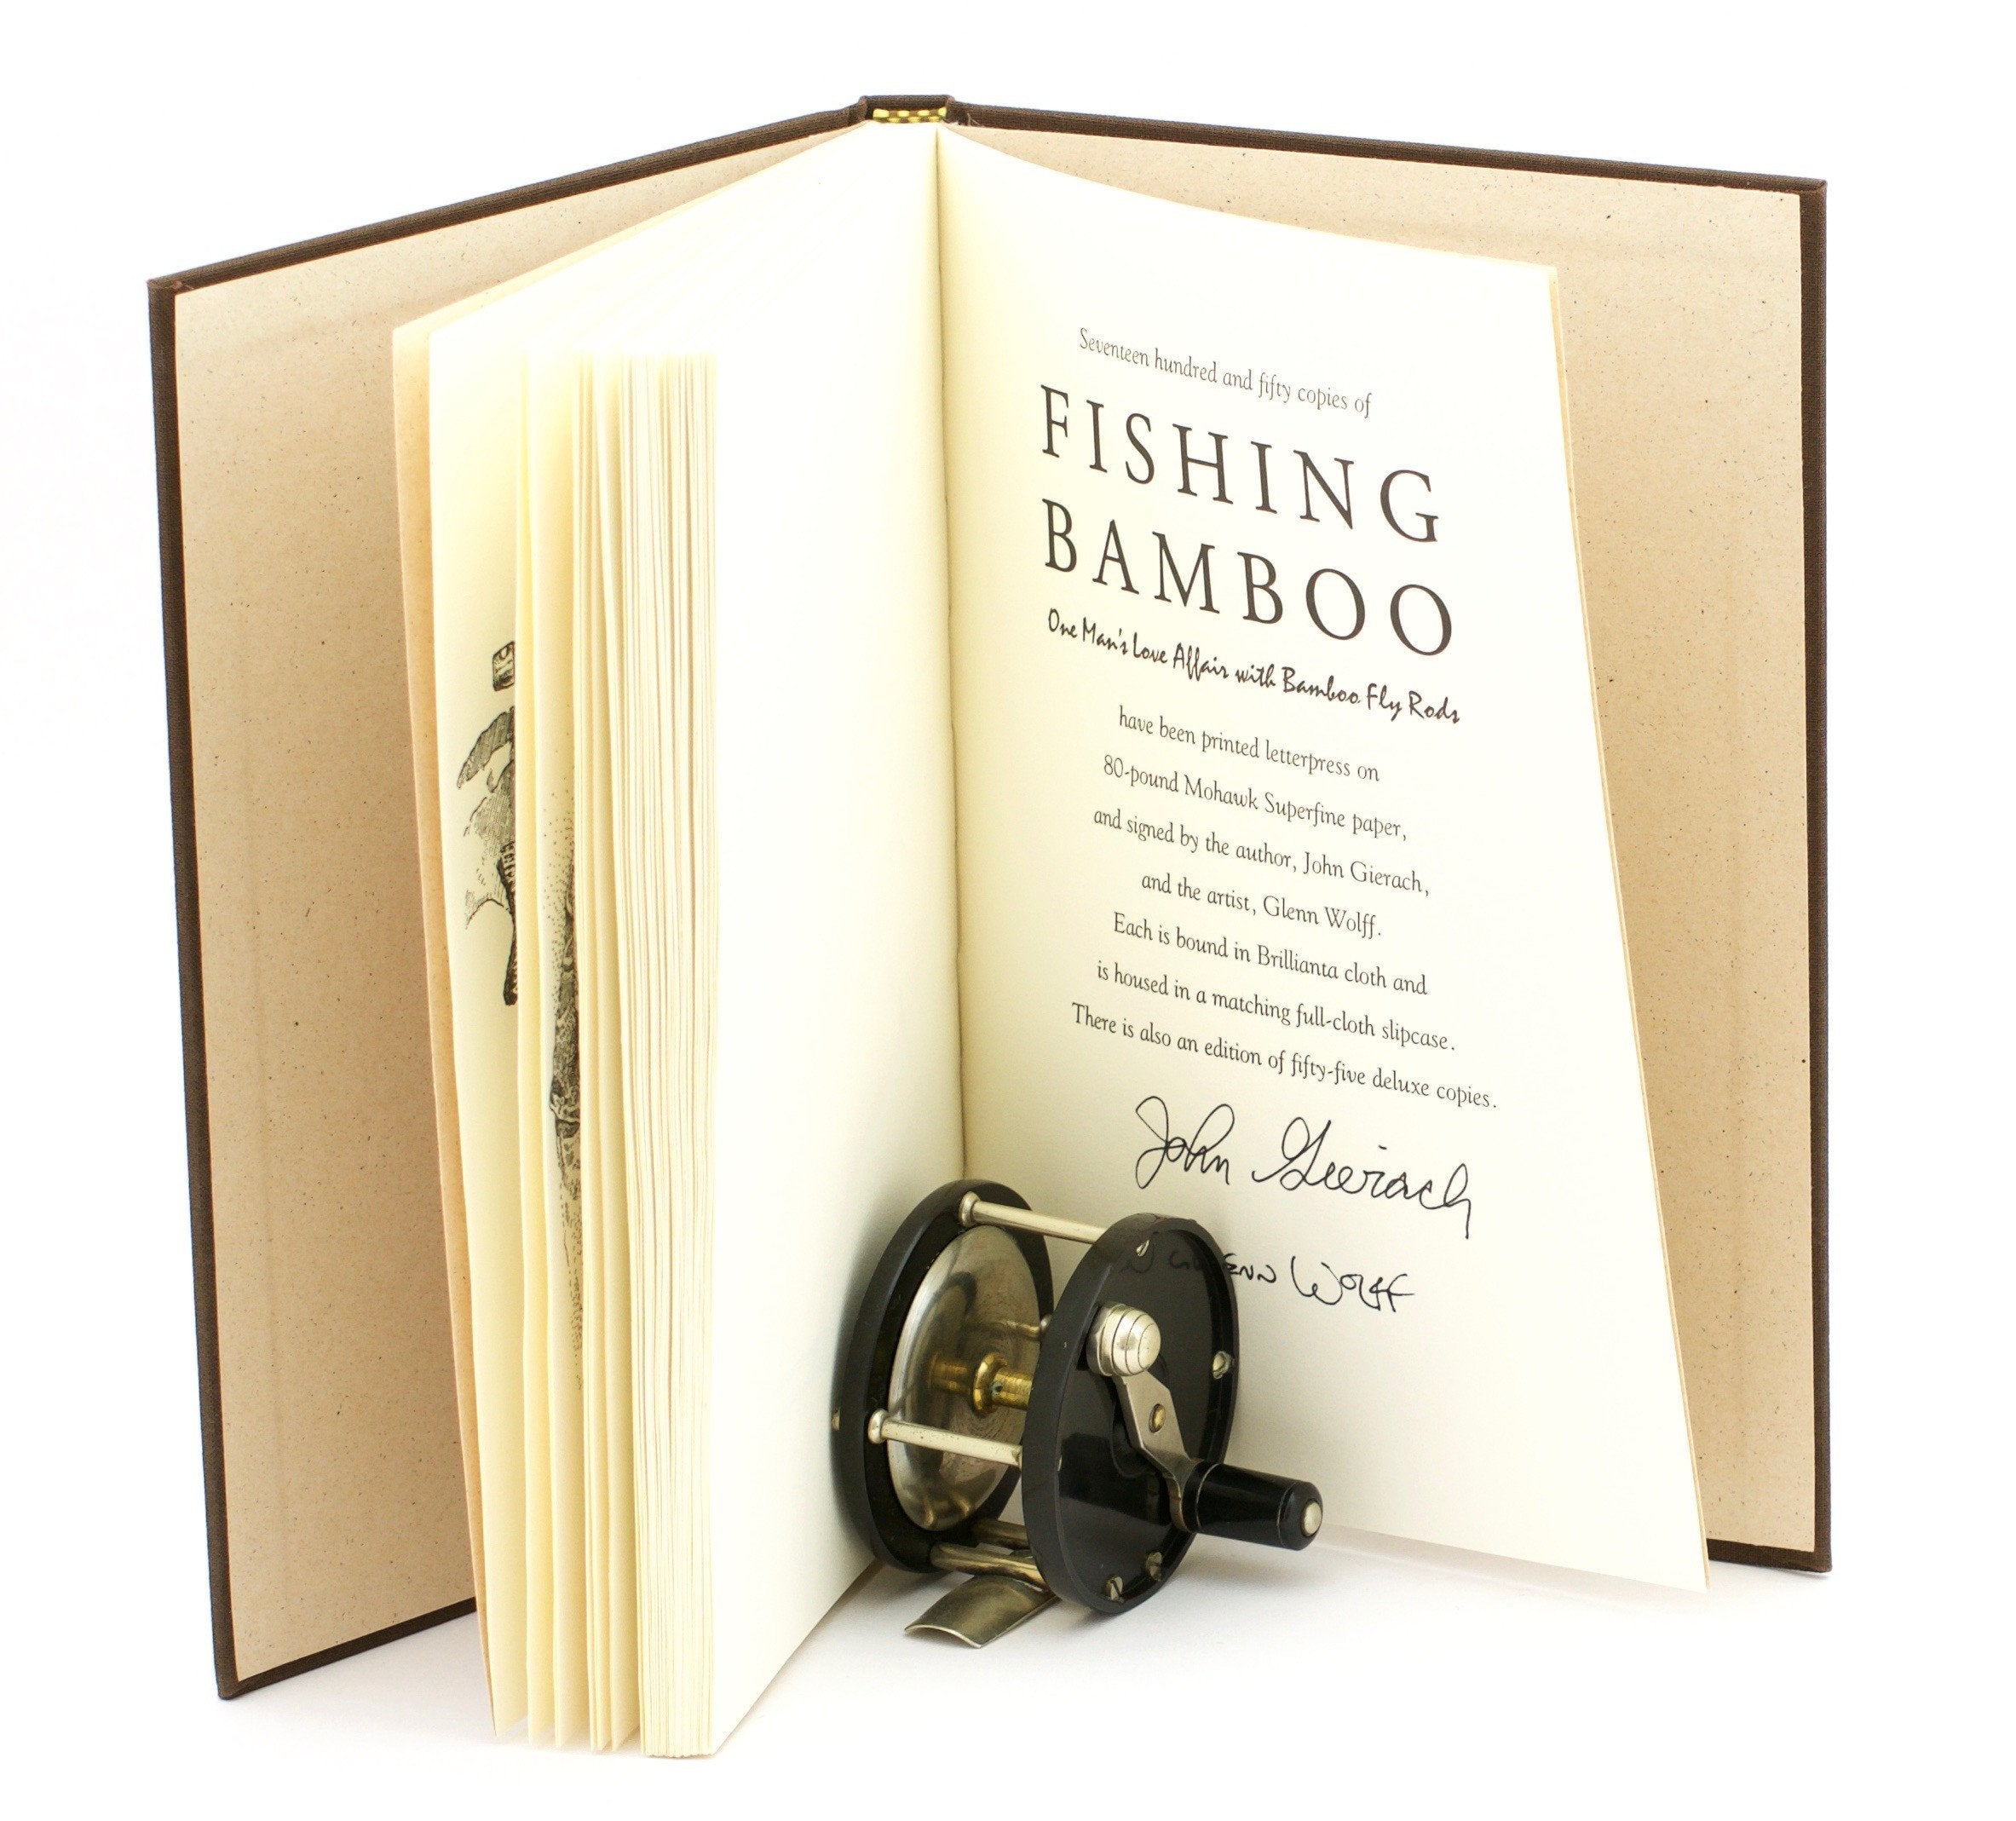 Gierach, John - Fishing Bamboo Limited Edition - Spinoza Rod Company